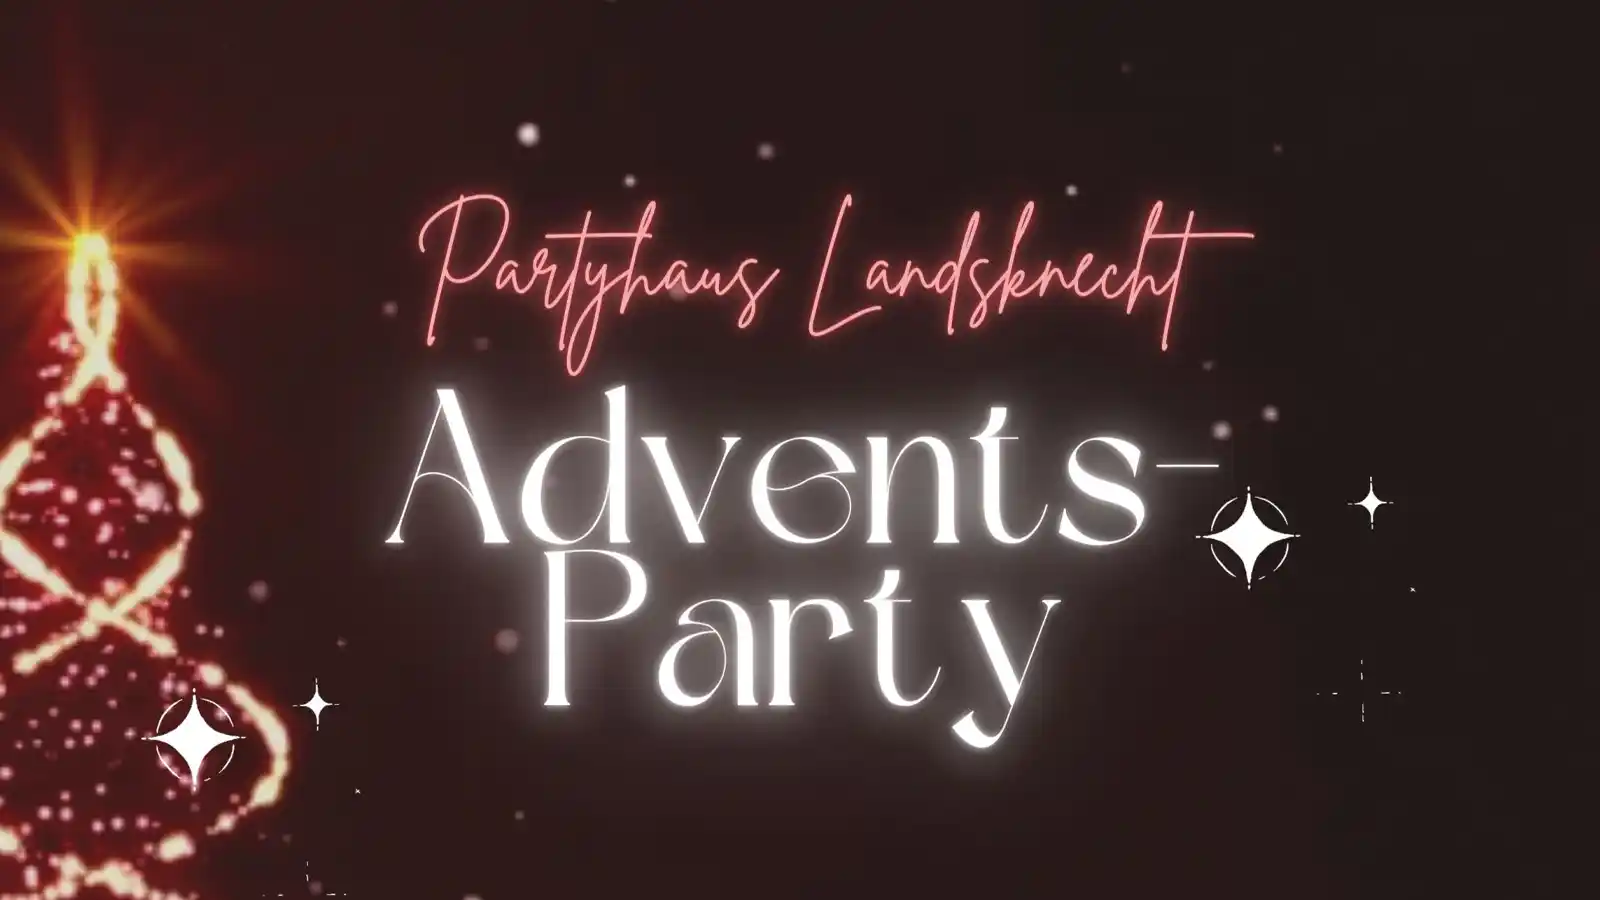 Advents-Party Partyhaus Landsknecht